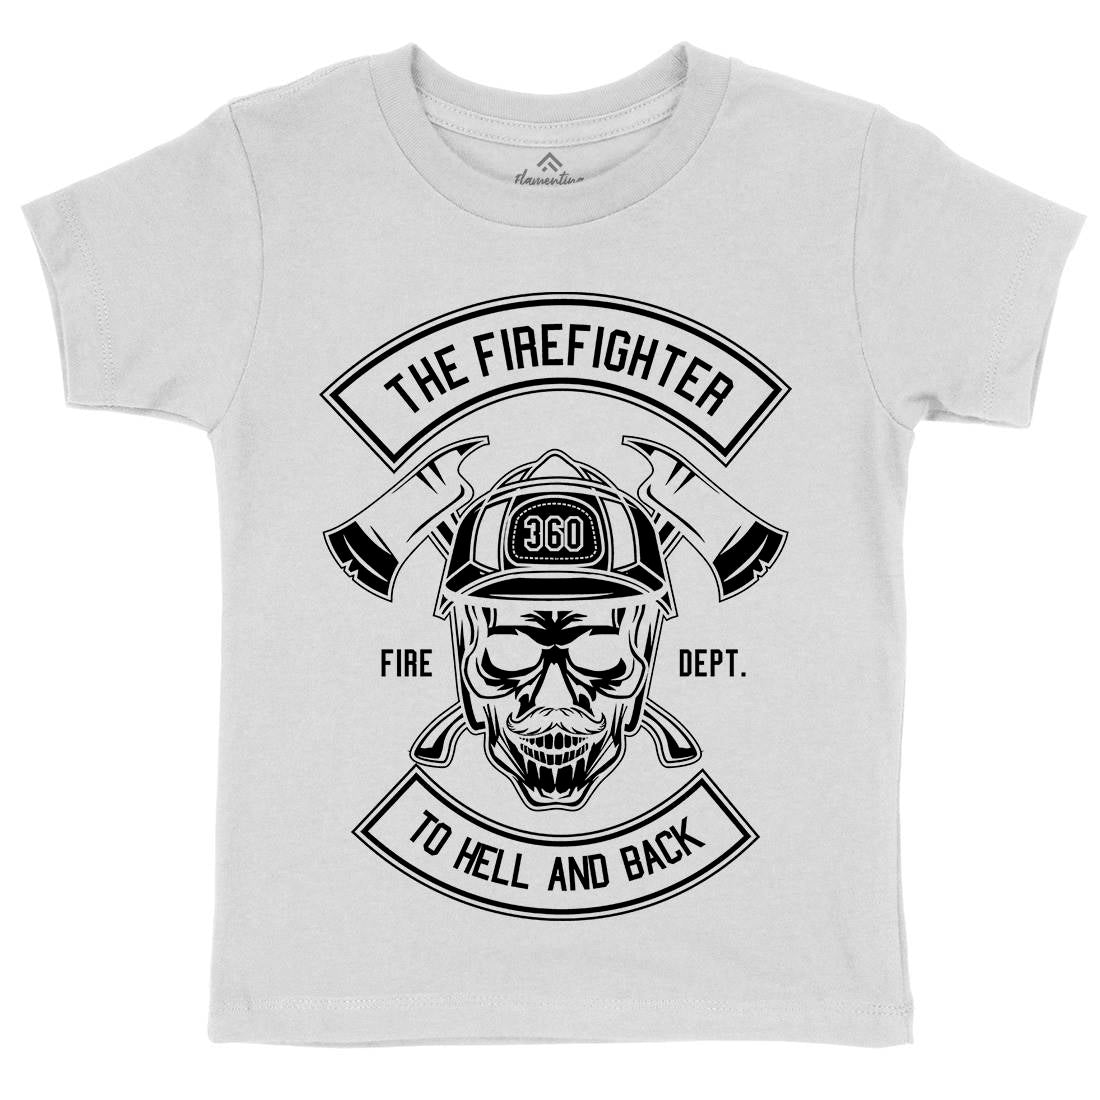 The Fire Fighter Kids Crew Neck T-Shirt Firefighters B651